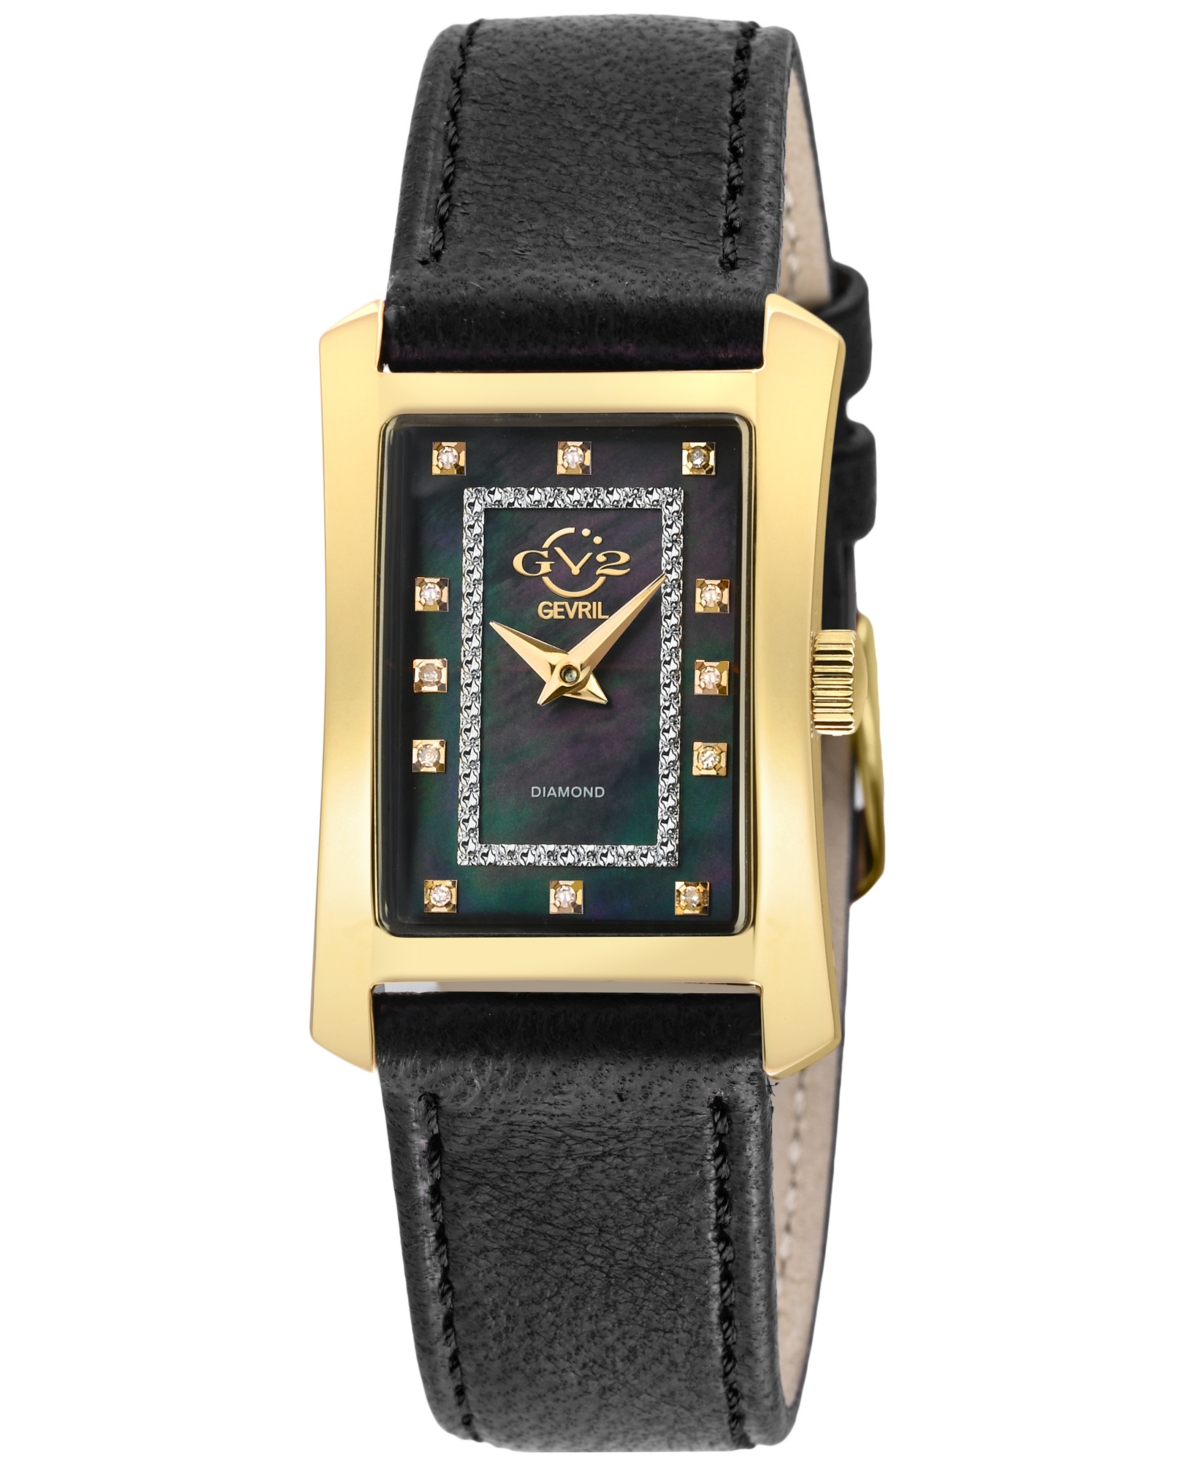 Gv2 By Gevril Women's Luino Swiss Quartz Diamond Accents Black Handmade Italian Leather Strap Watch 23mm X 29mm In Gold